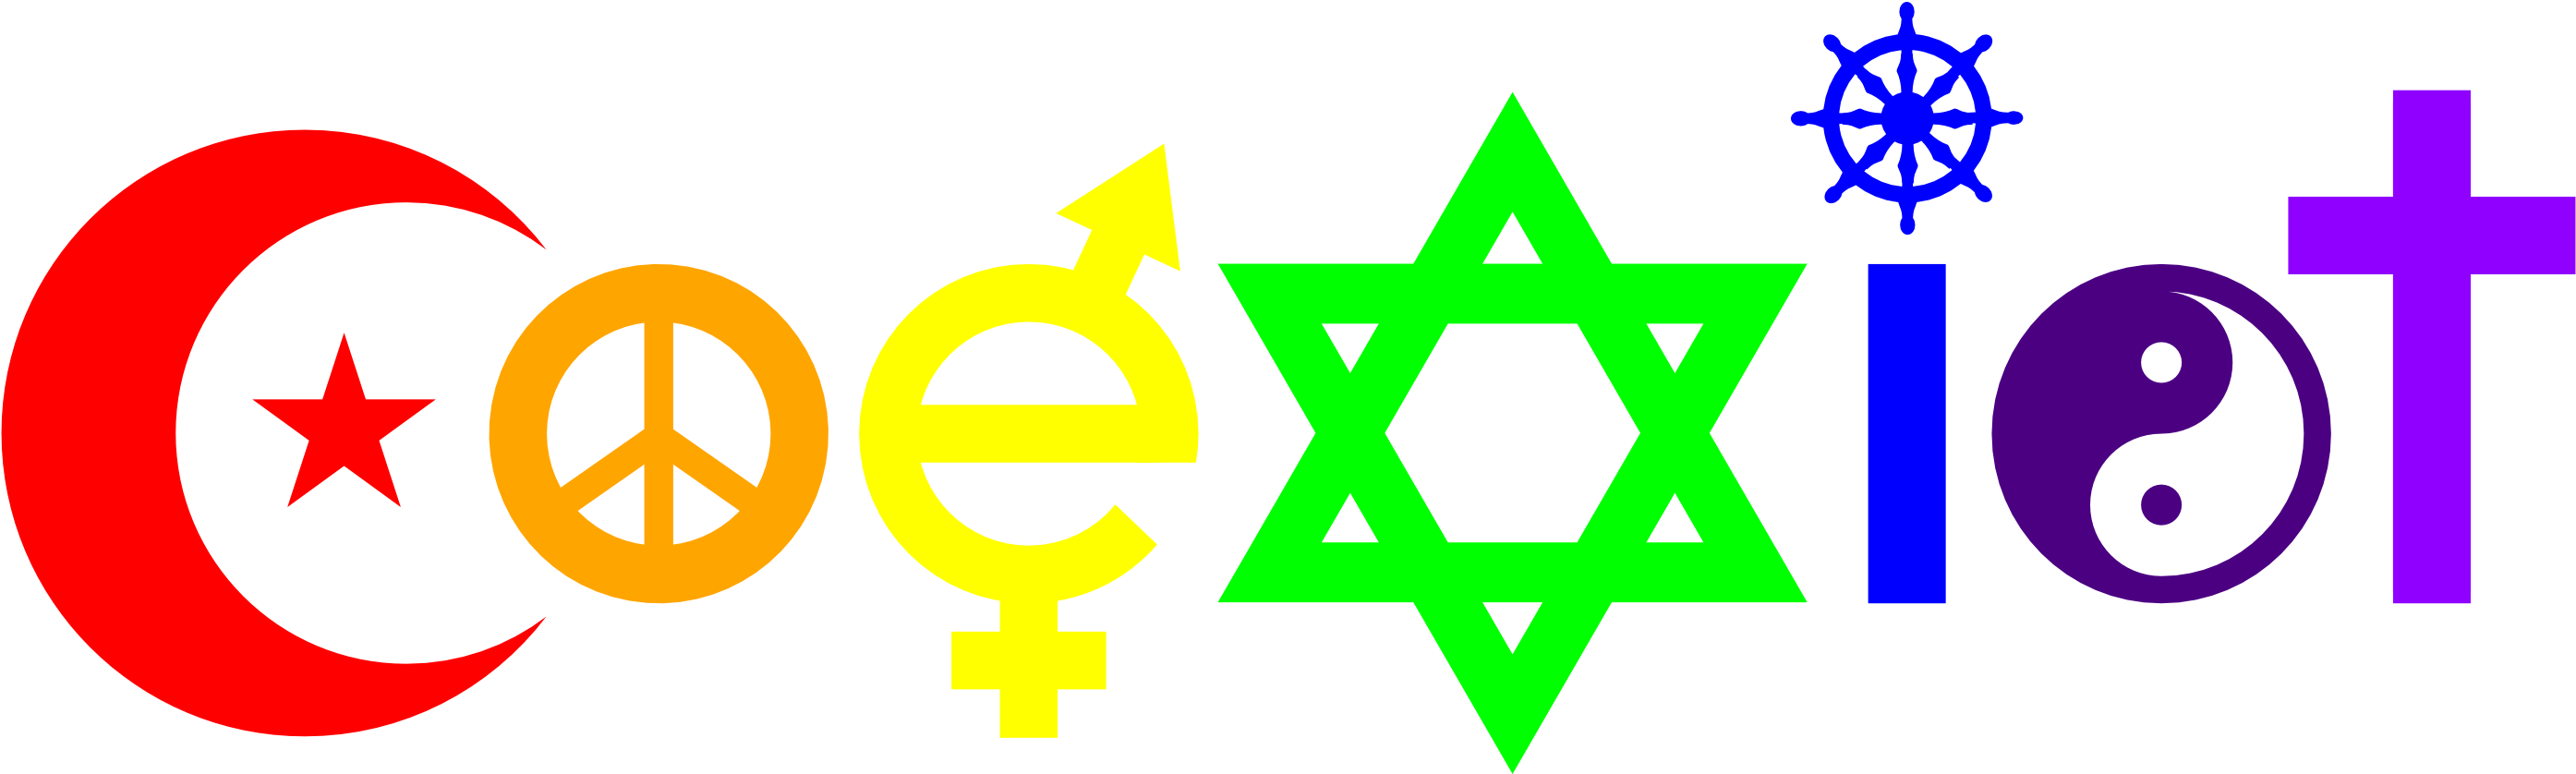 Coeiet Text Yellow Font Logo Line - Christianity Islam Judaism (3000x3000)